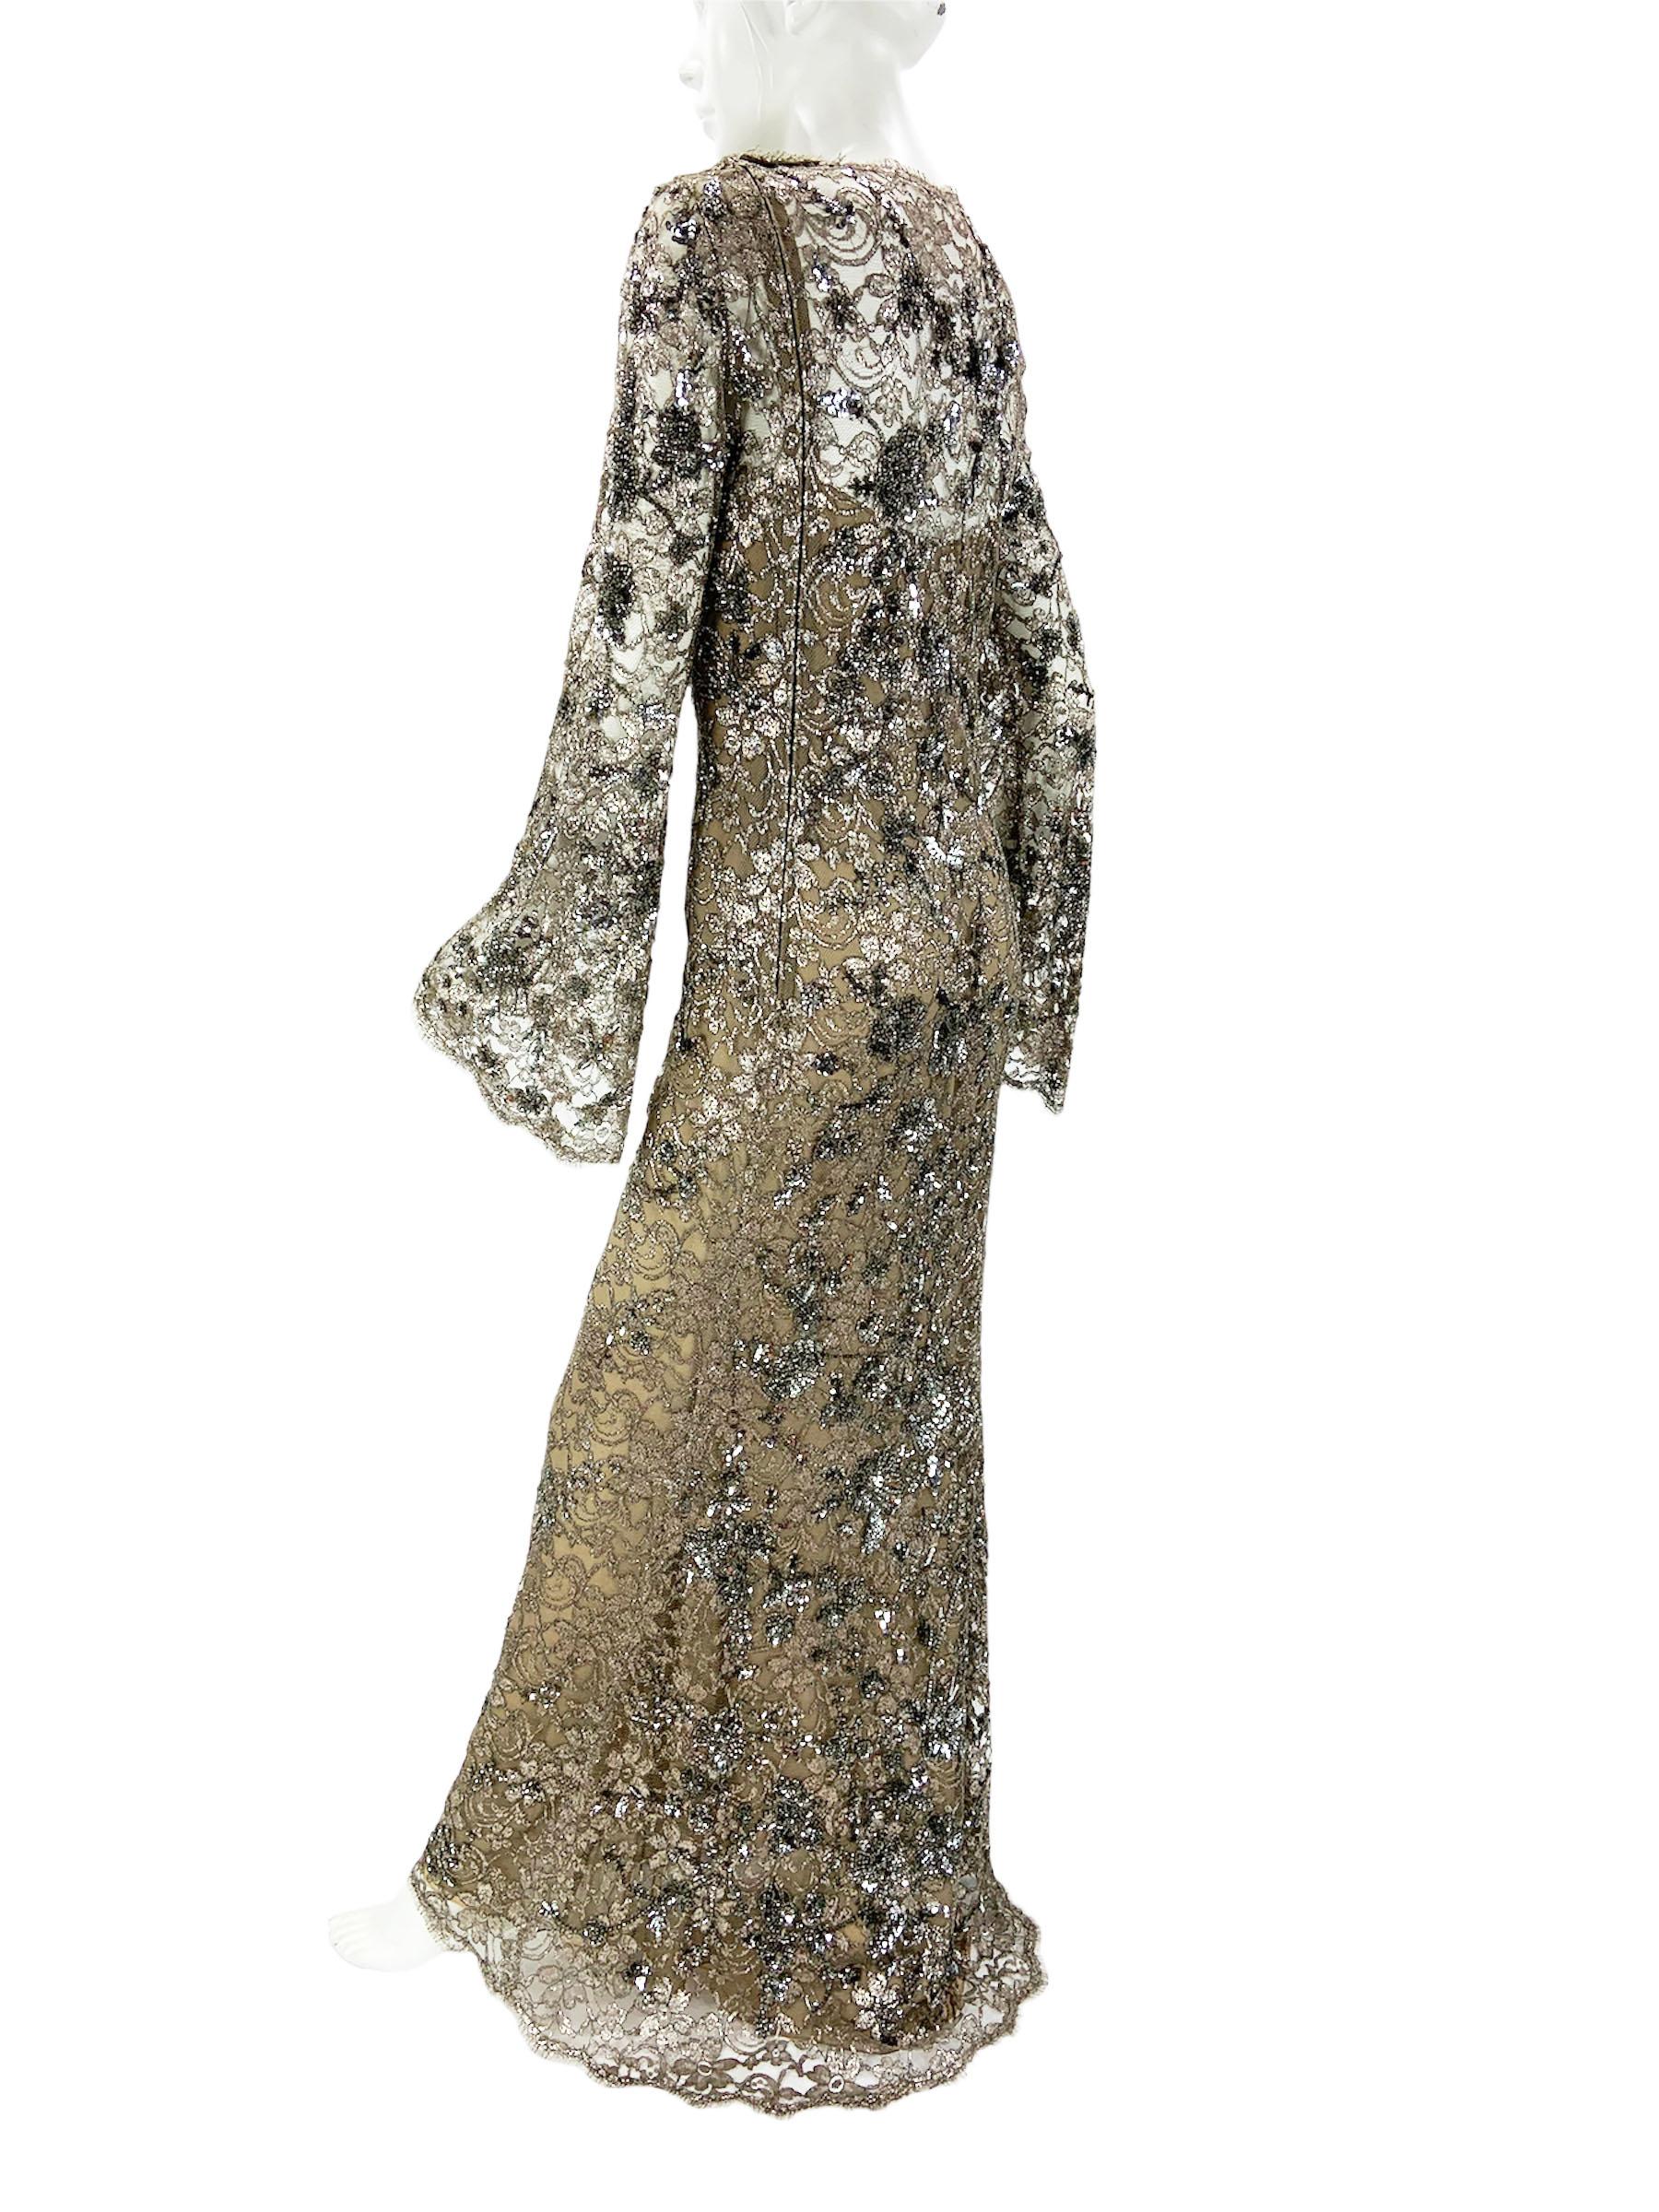 Vintage Oscar de la Renta Fully Embellished Smoky Gray Lace Dress Gown  1